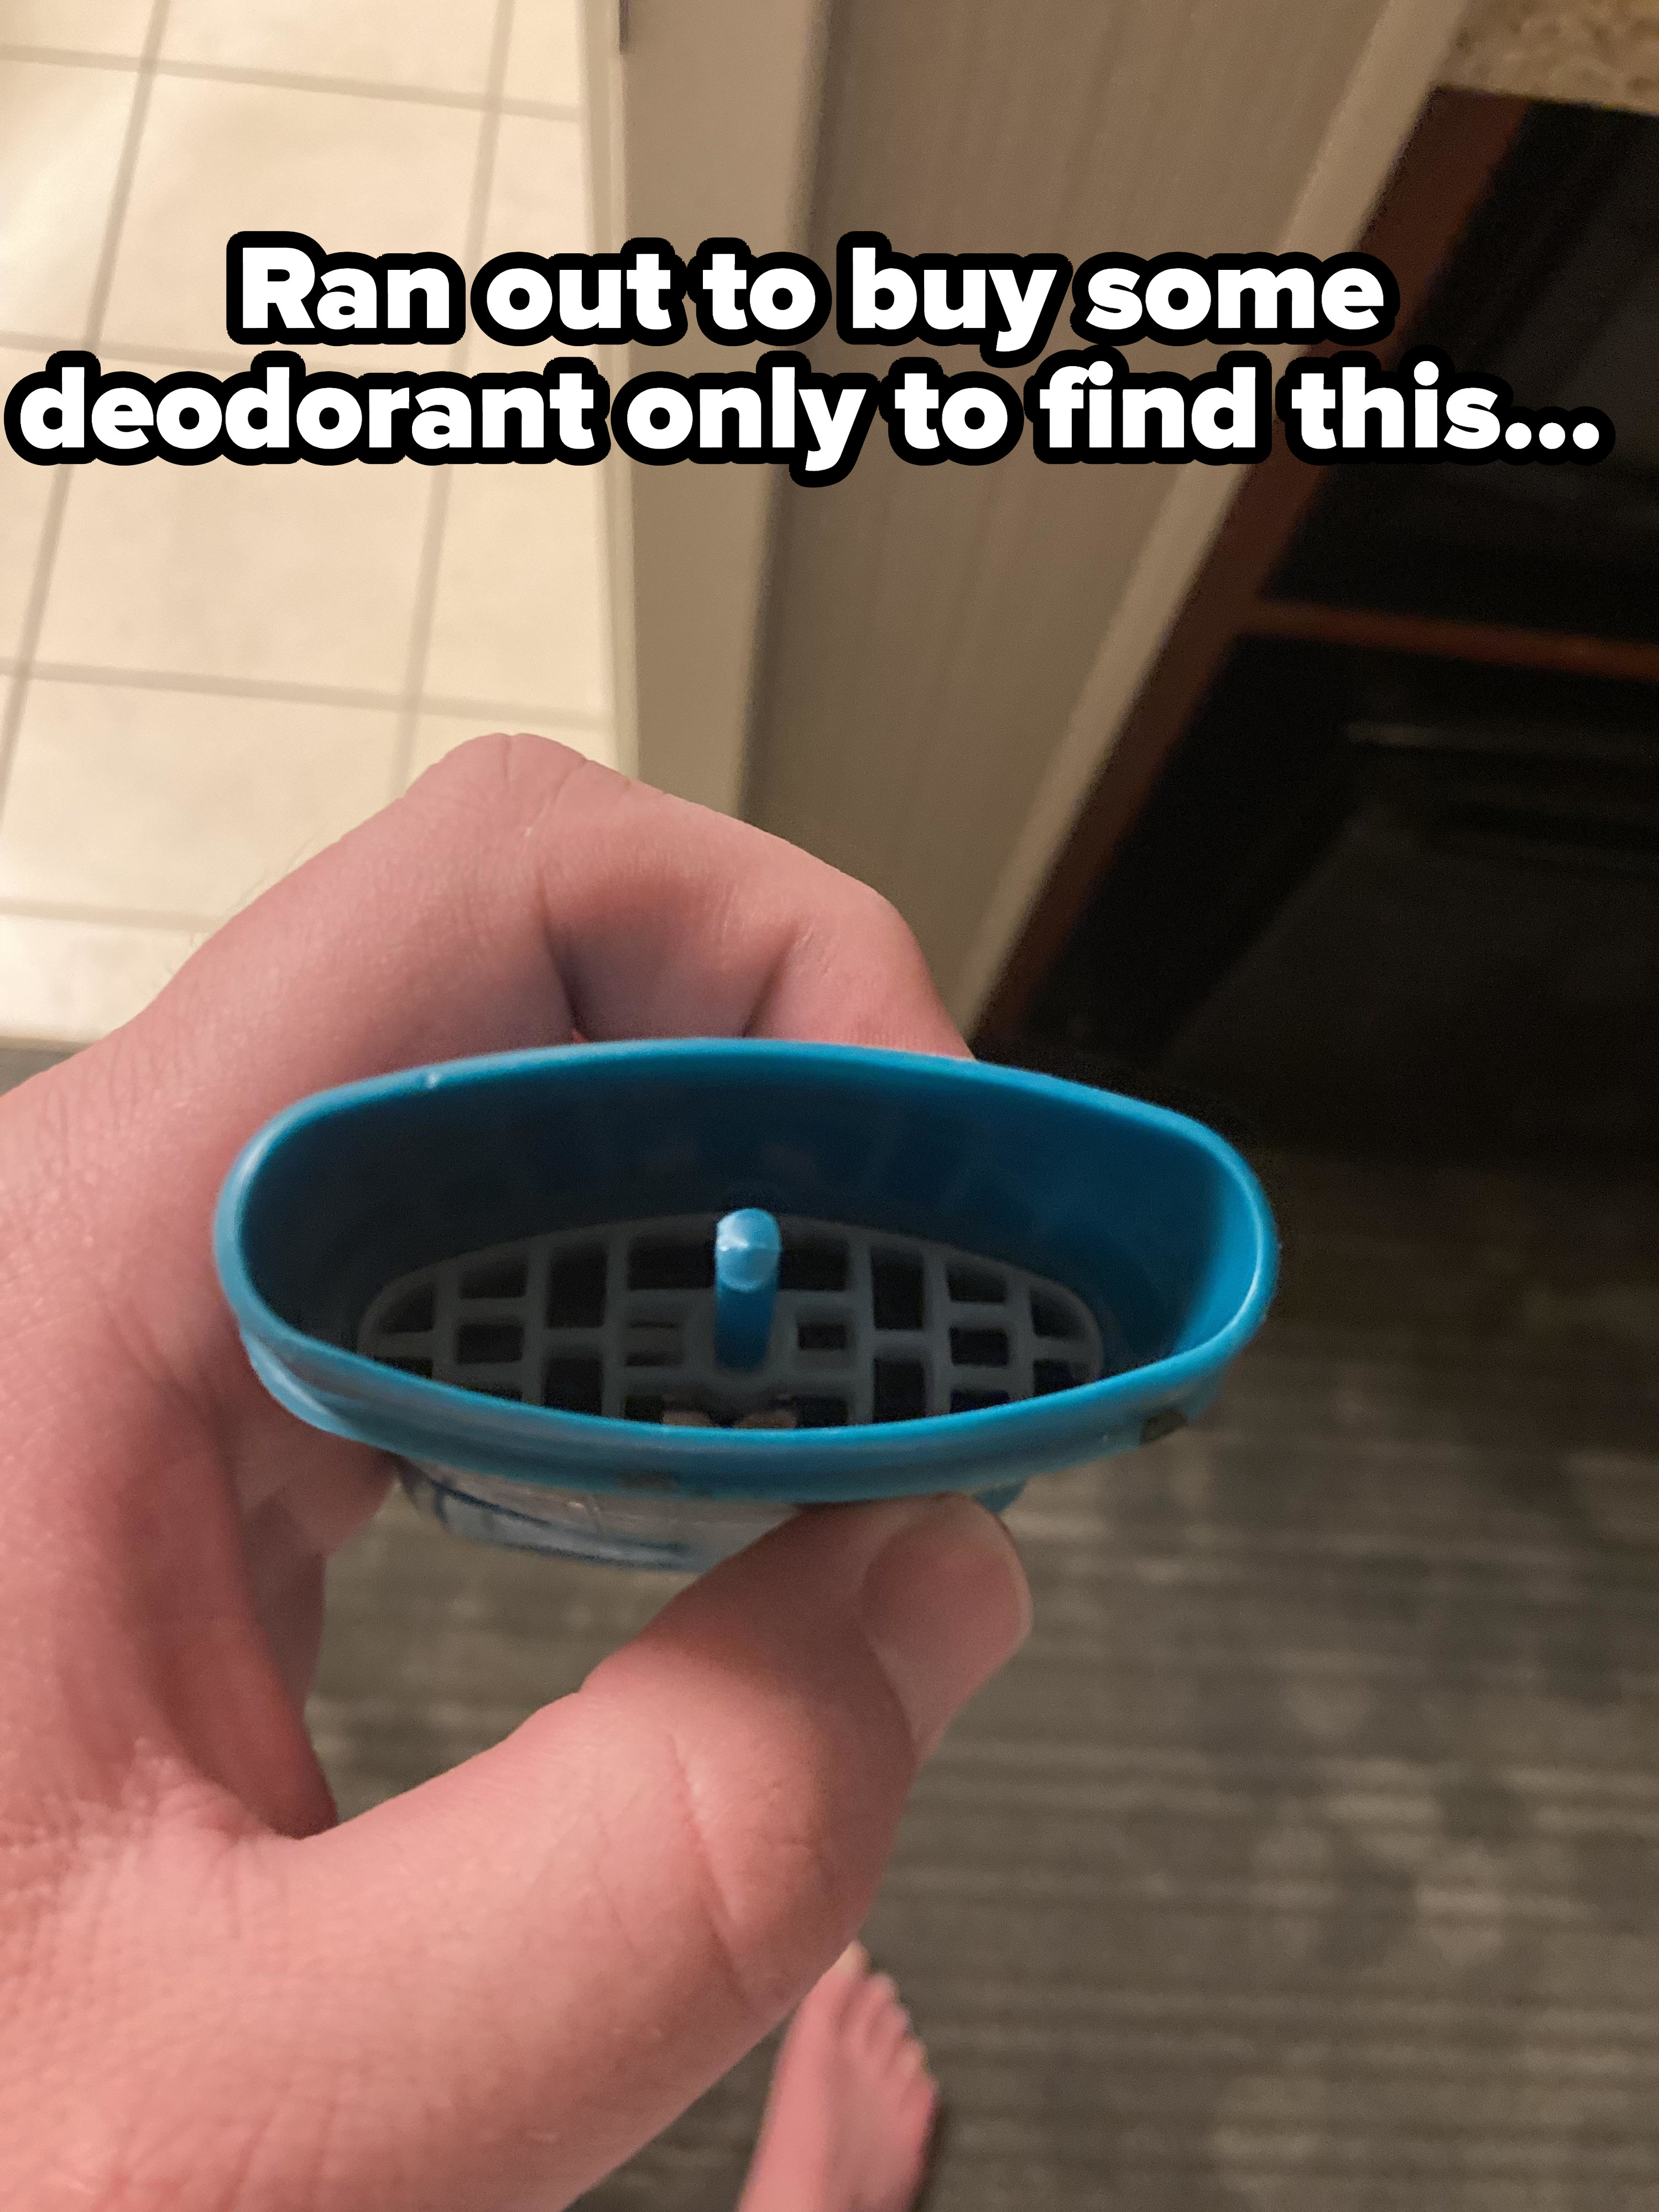 An empty deodorant stick